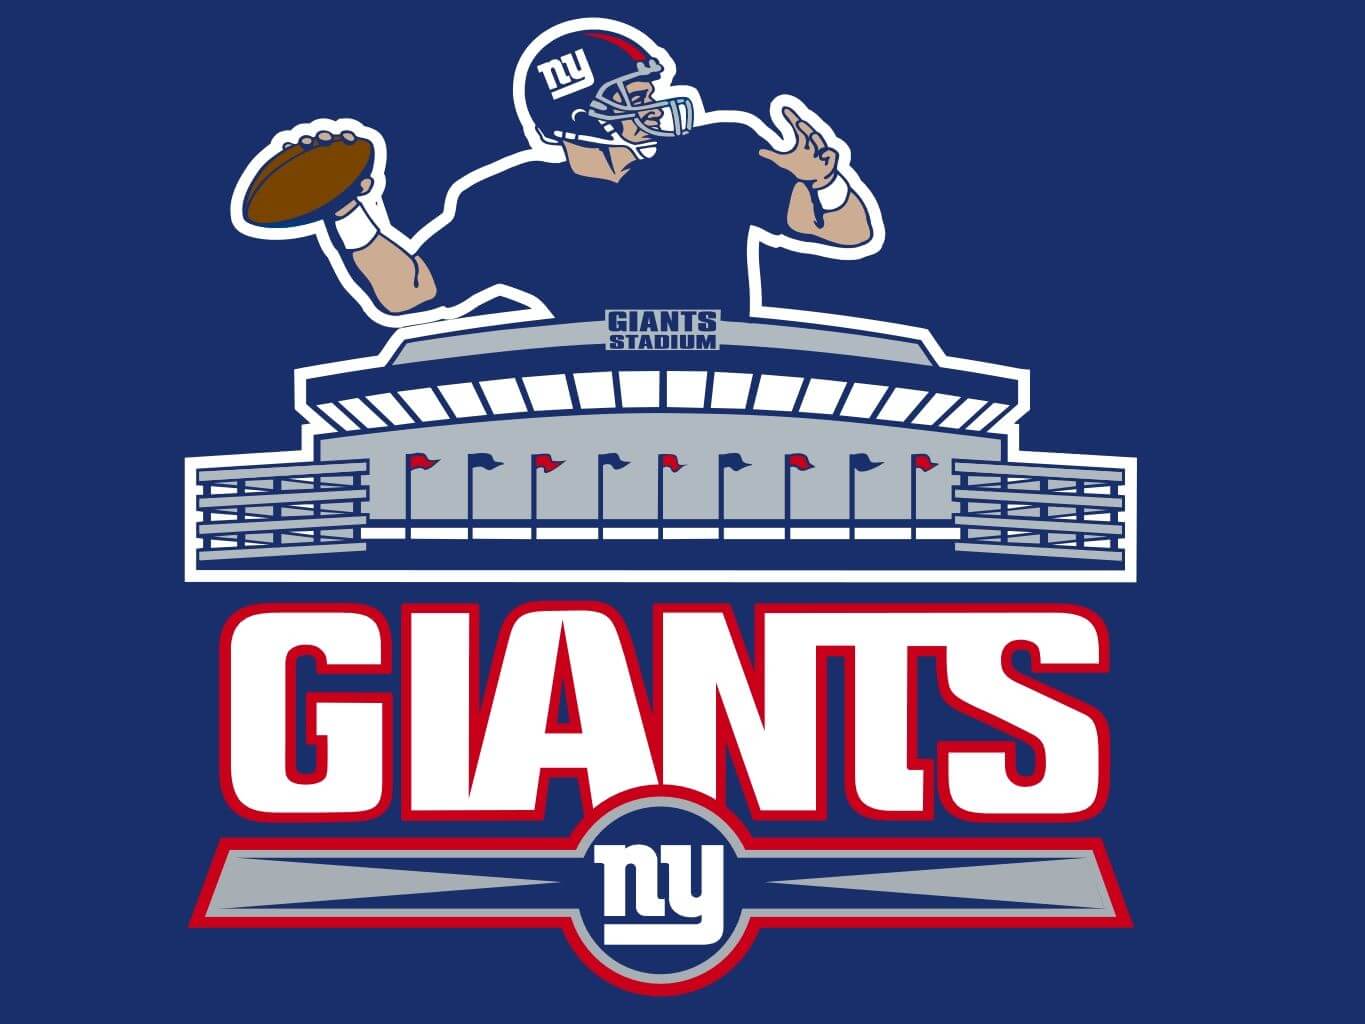 Giants Stadium LLC | Organizational Profile, Work & Jobs